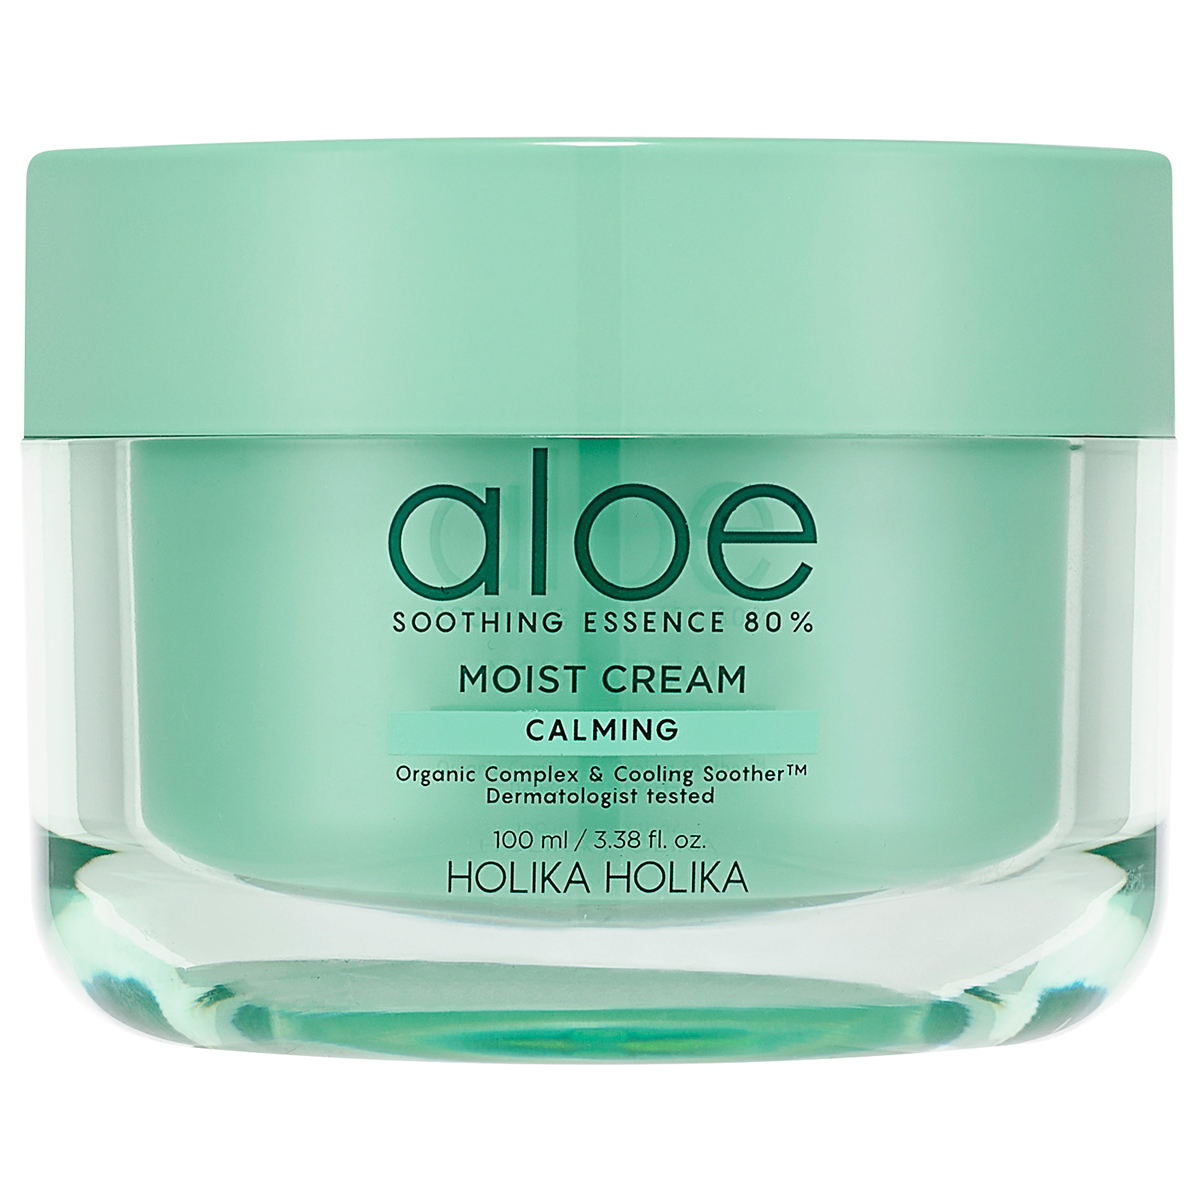 Aloe Soothing Essence 80% Moist Cream, 100 ml Holika Holika K-Beauty